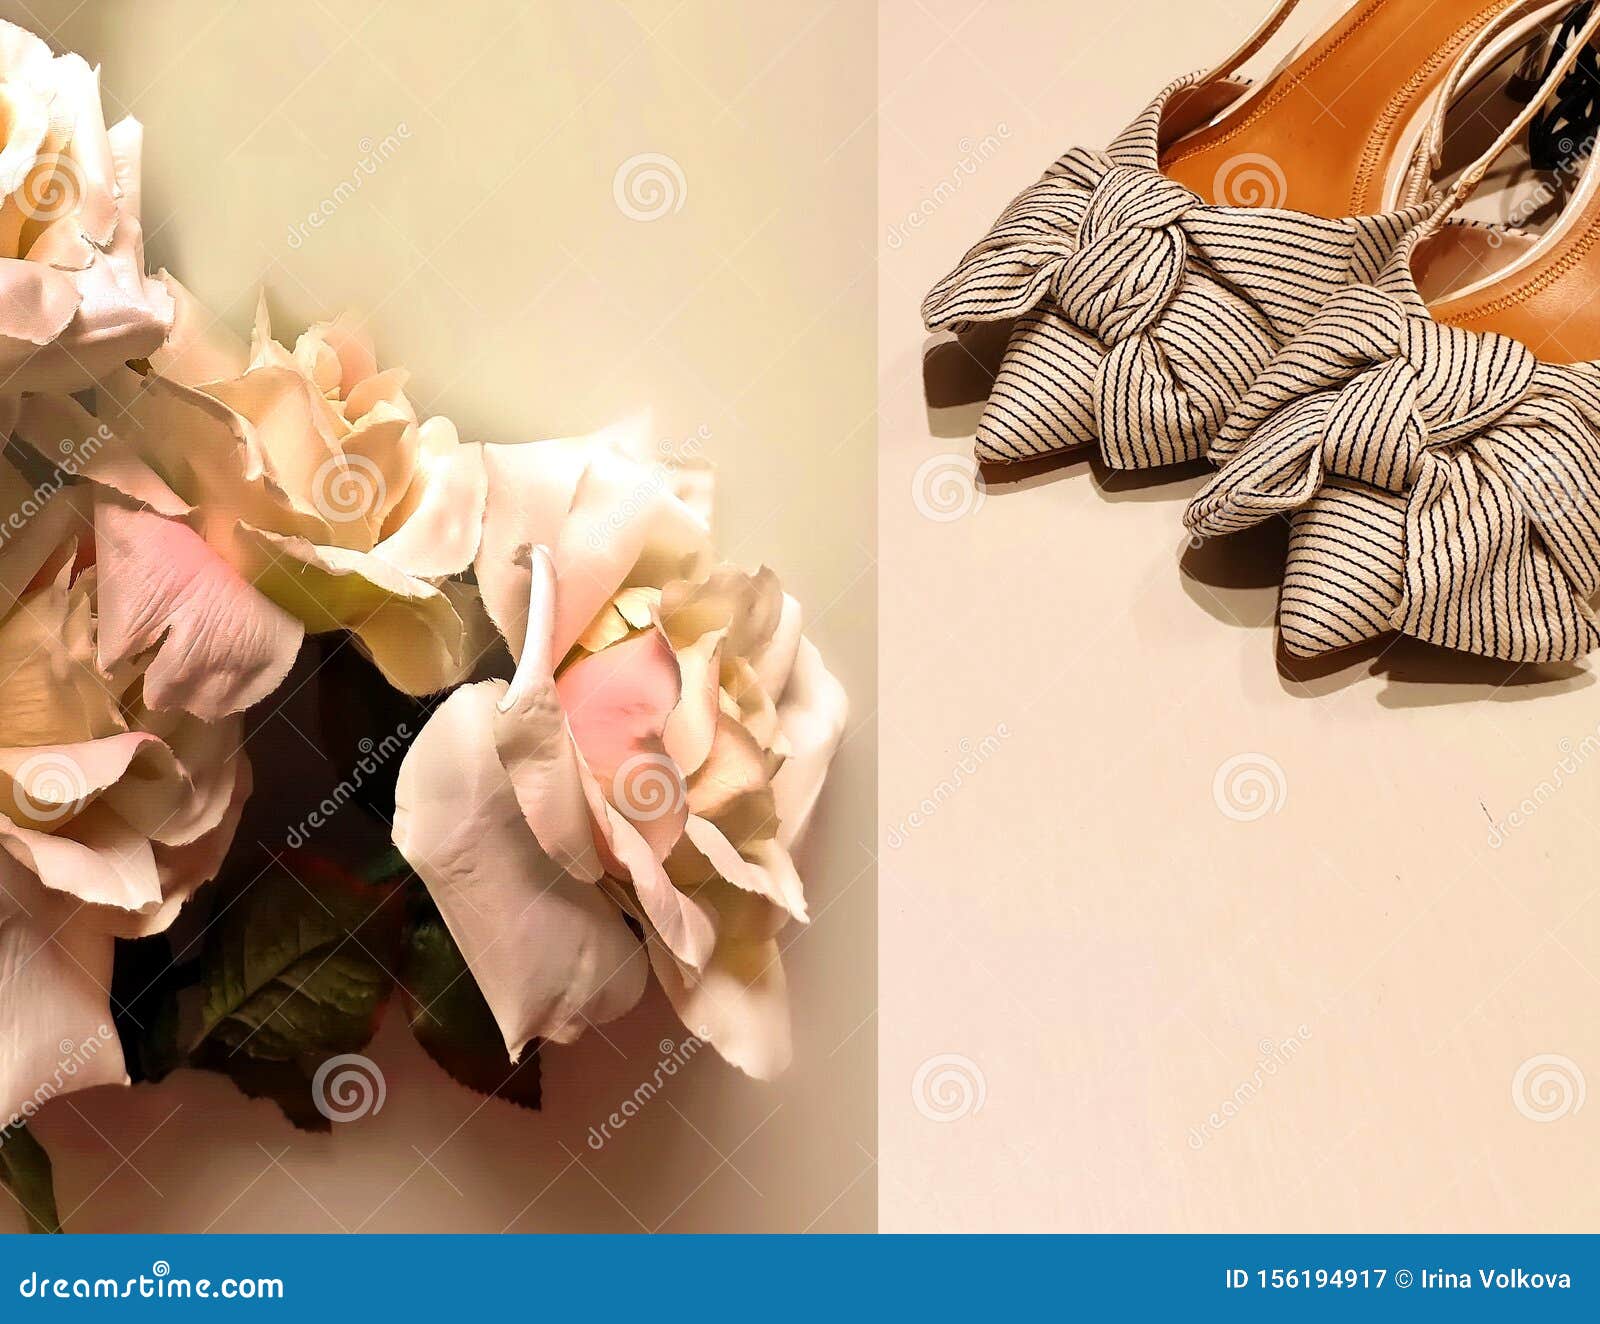 women shoes  flowers roses pink tea rose  background  moda concept luxury elegance glamour summer sandals